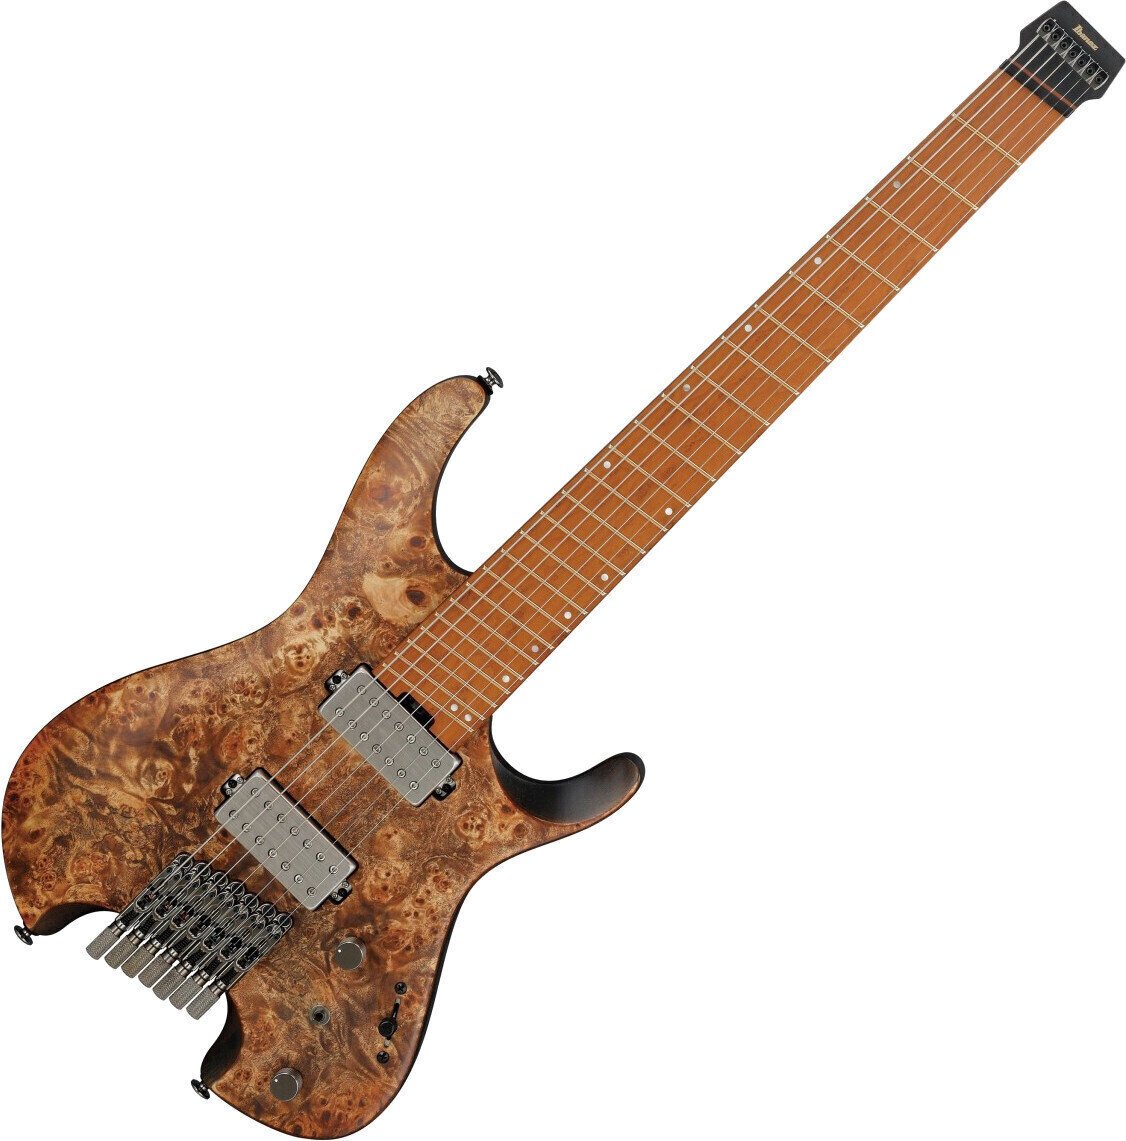 Headless gitara Ibanez QX527PB-ABS Antique Brown Stained